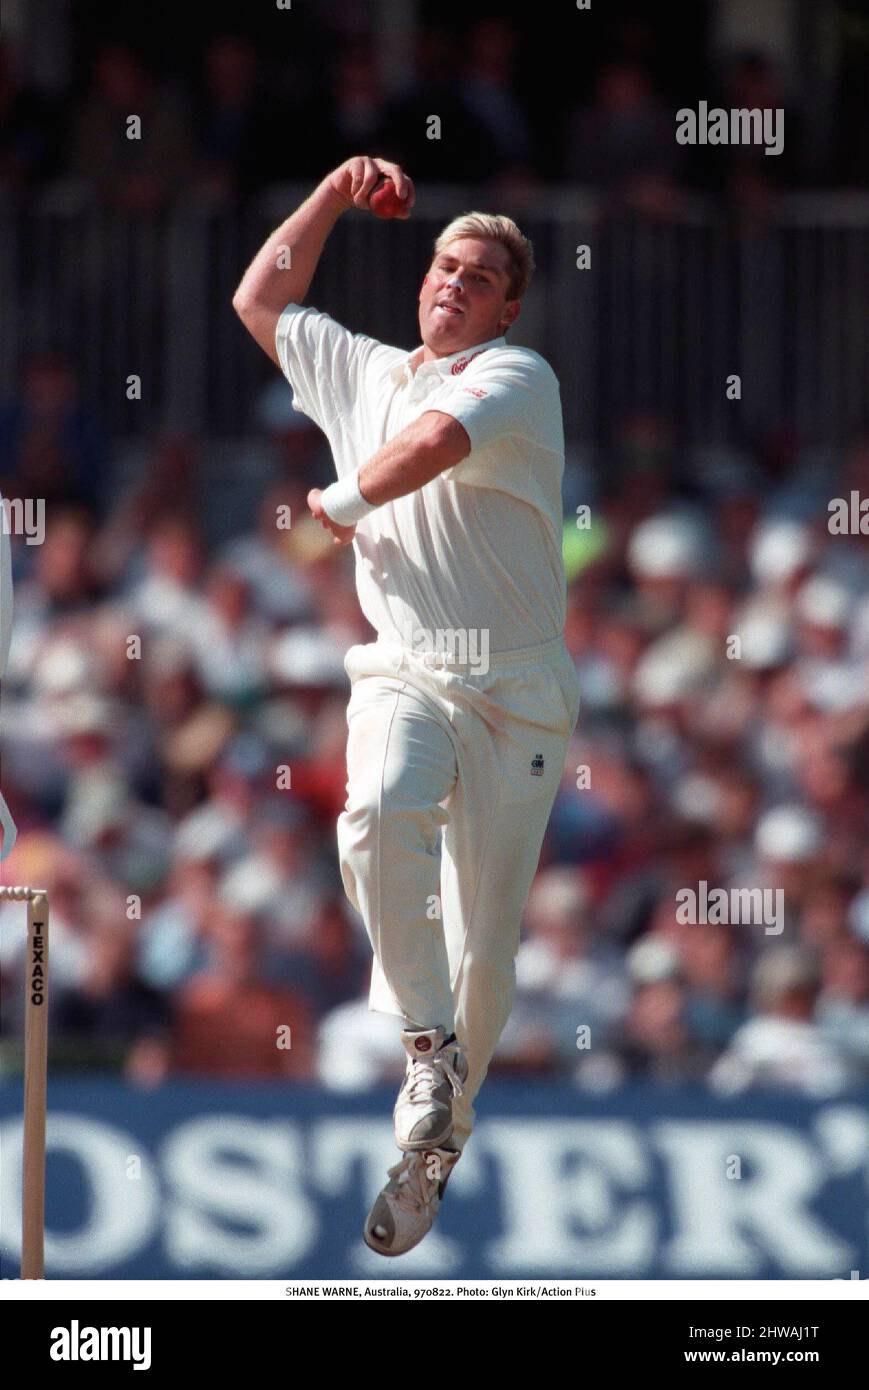 SHANE WARNE, Australia, 970822. Photo: Glyn Kirk/Action Plus.1997.bowling.bowler.cricket. Stock Photo